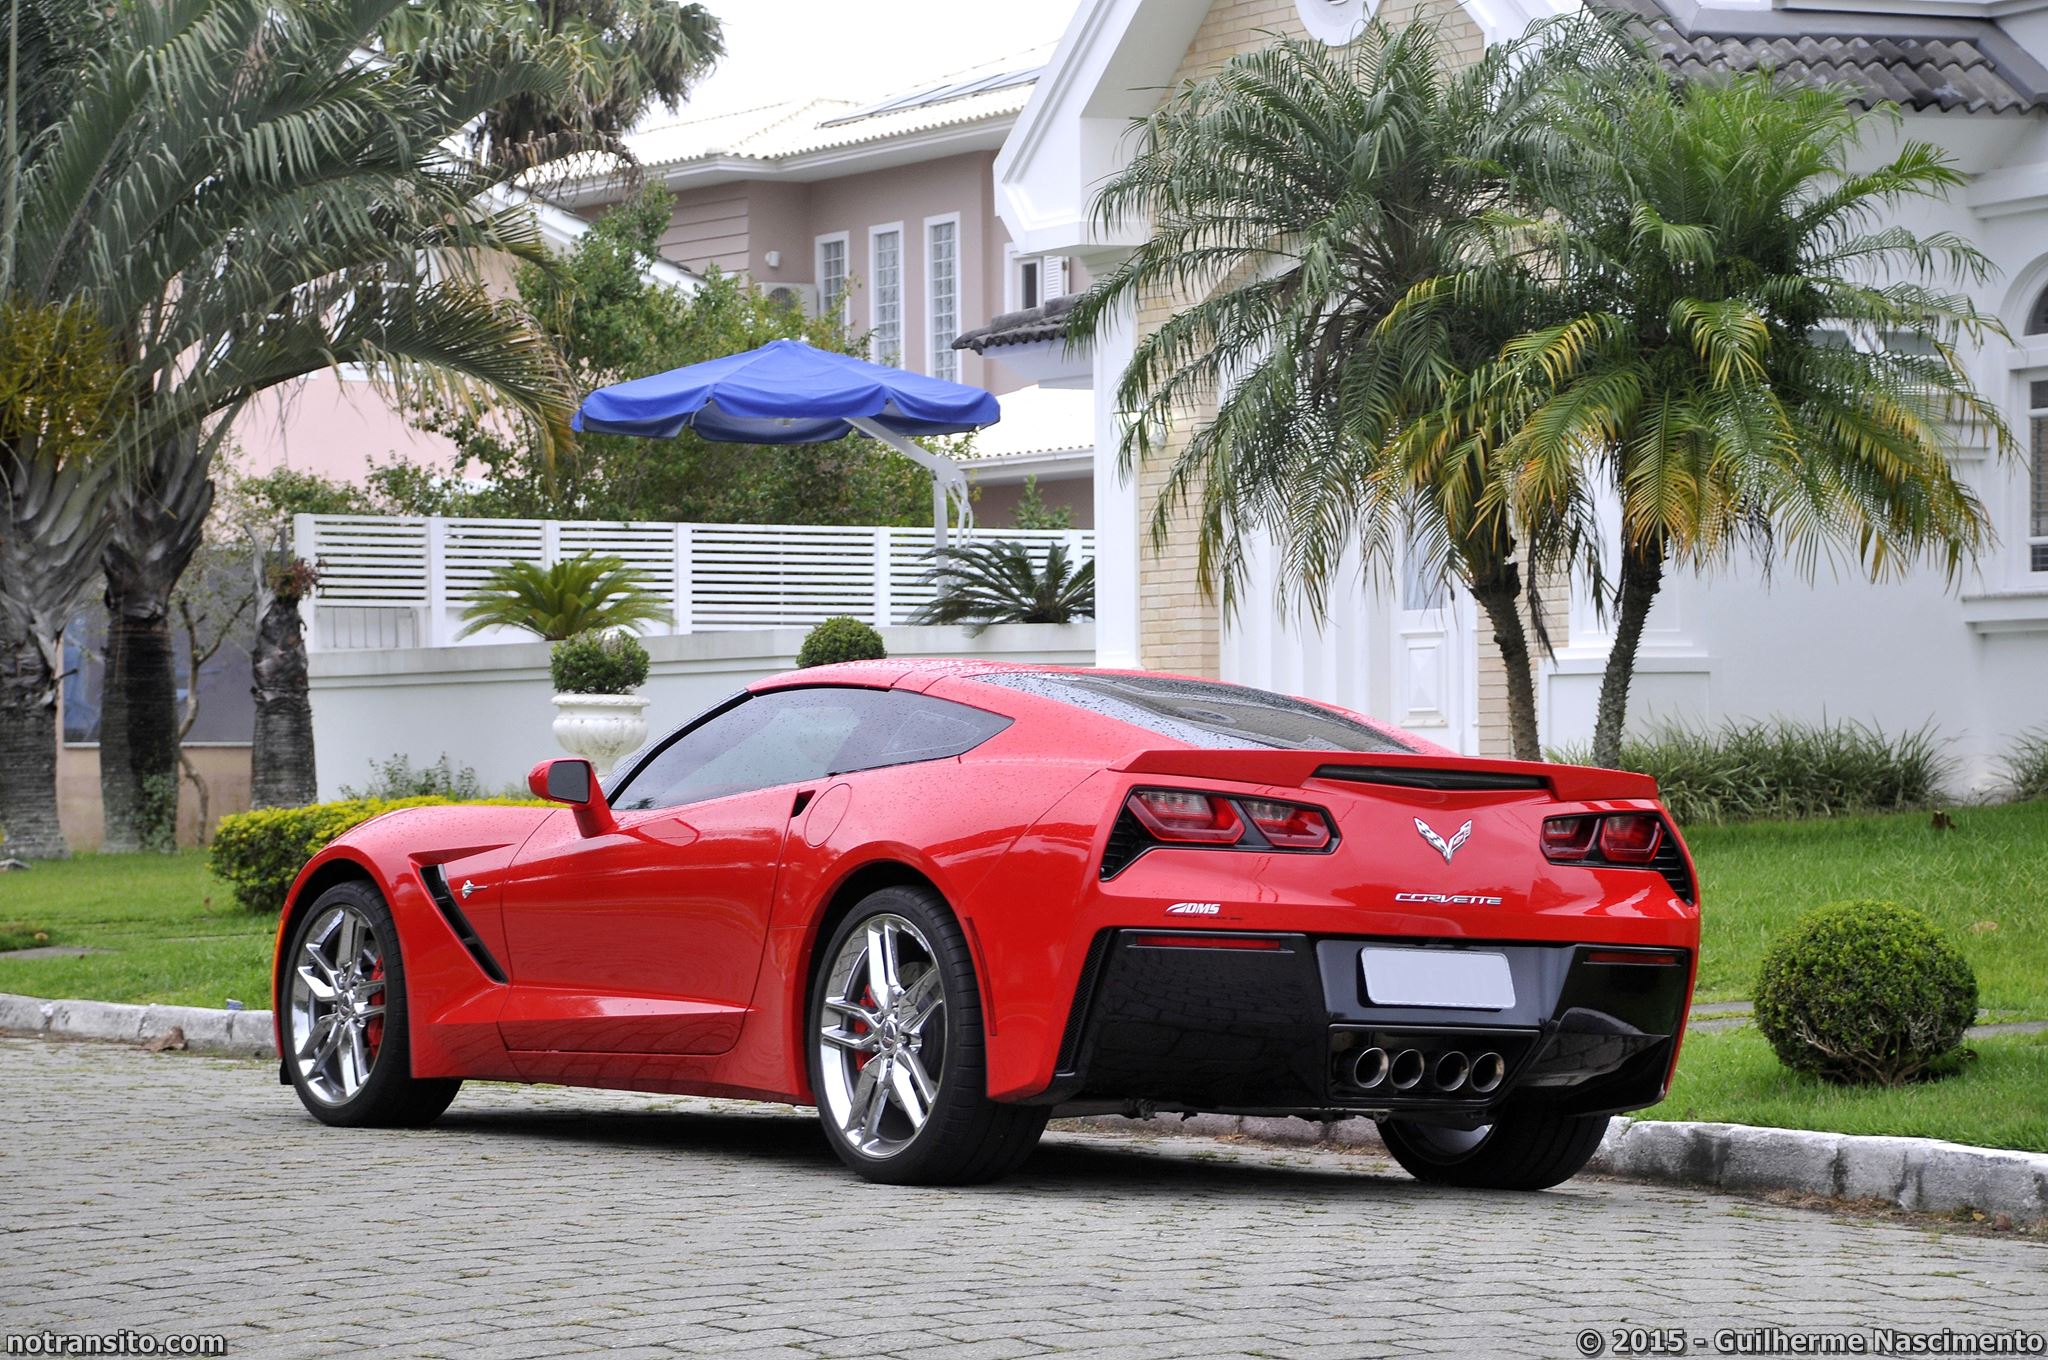 Chevrolet Corvette C7 Stingray Torch Red, Jurerê Internacional, Supercarros em Jurerê Internacional, Exóticos em Jurerê Internacional